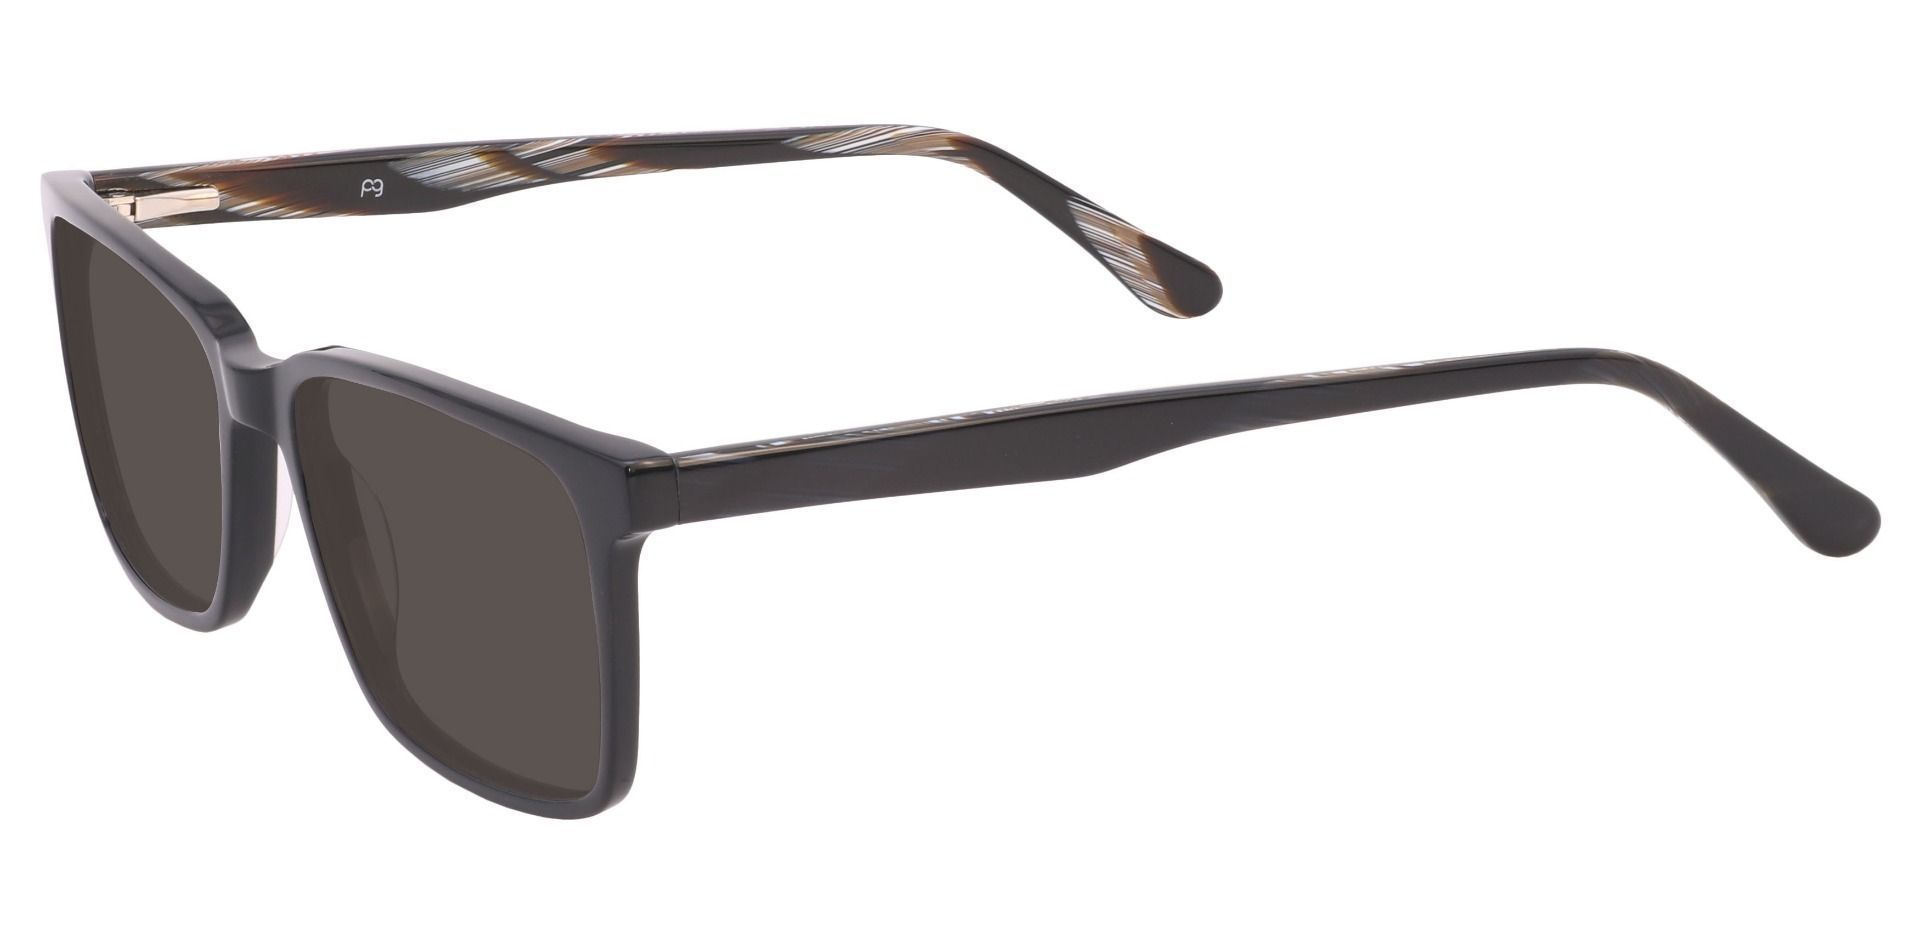 Venice Rectangle Non-Rx Sunglasses - Black Frame With Gray Lenses